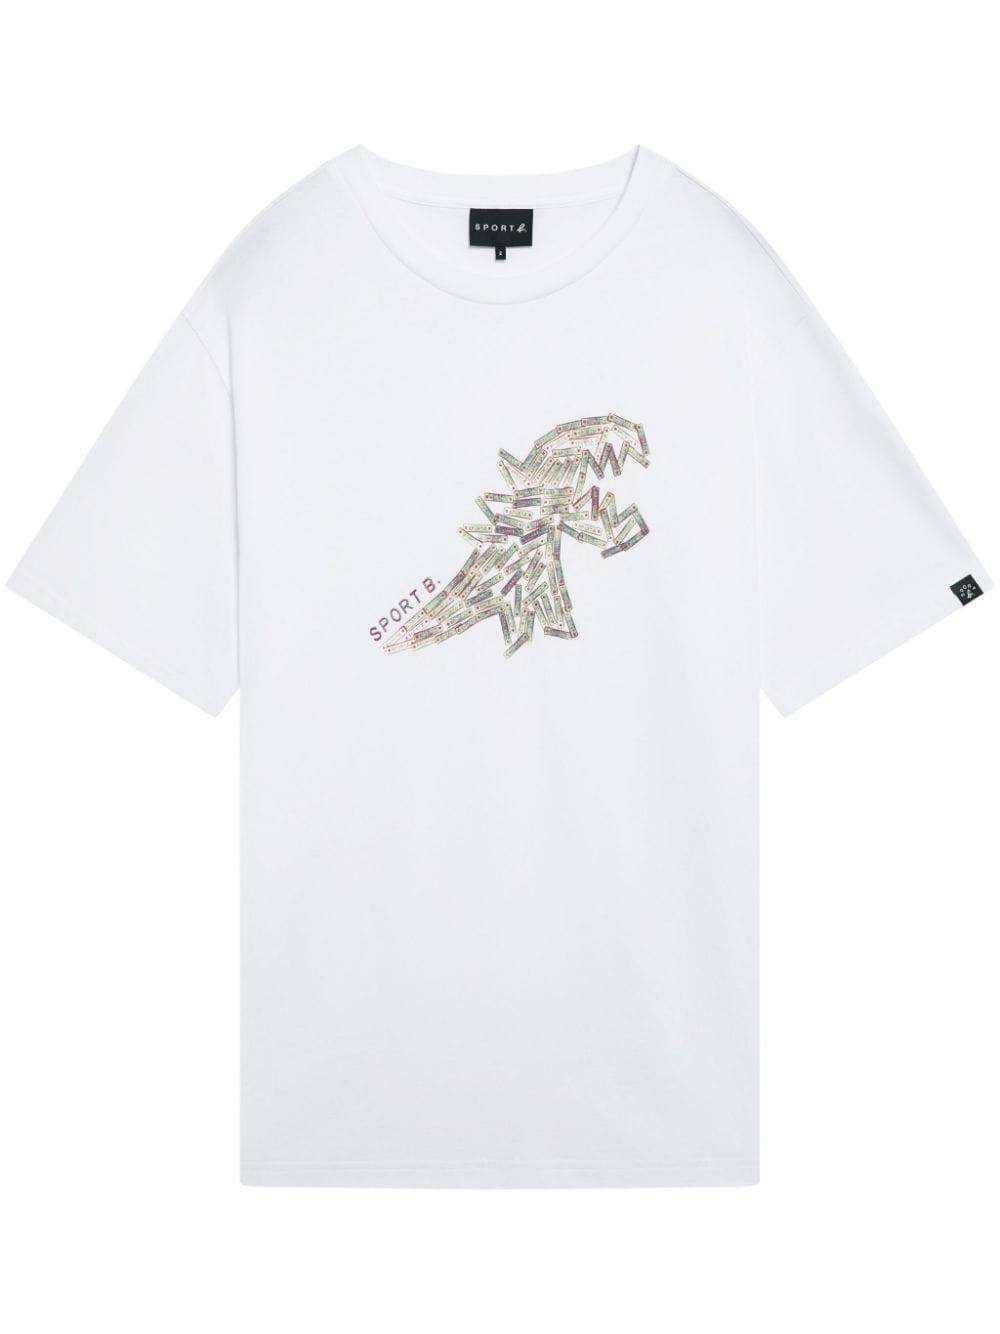 SPORT b. by agnès b. T-Shirt mit Dino-Print - Weiß von SPORT b. by agnès b.